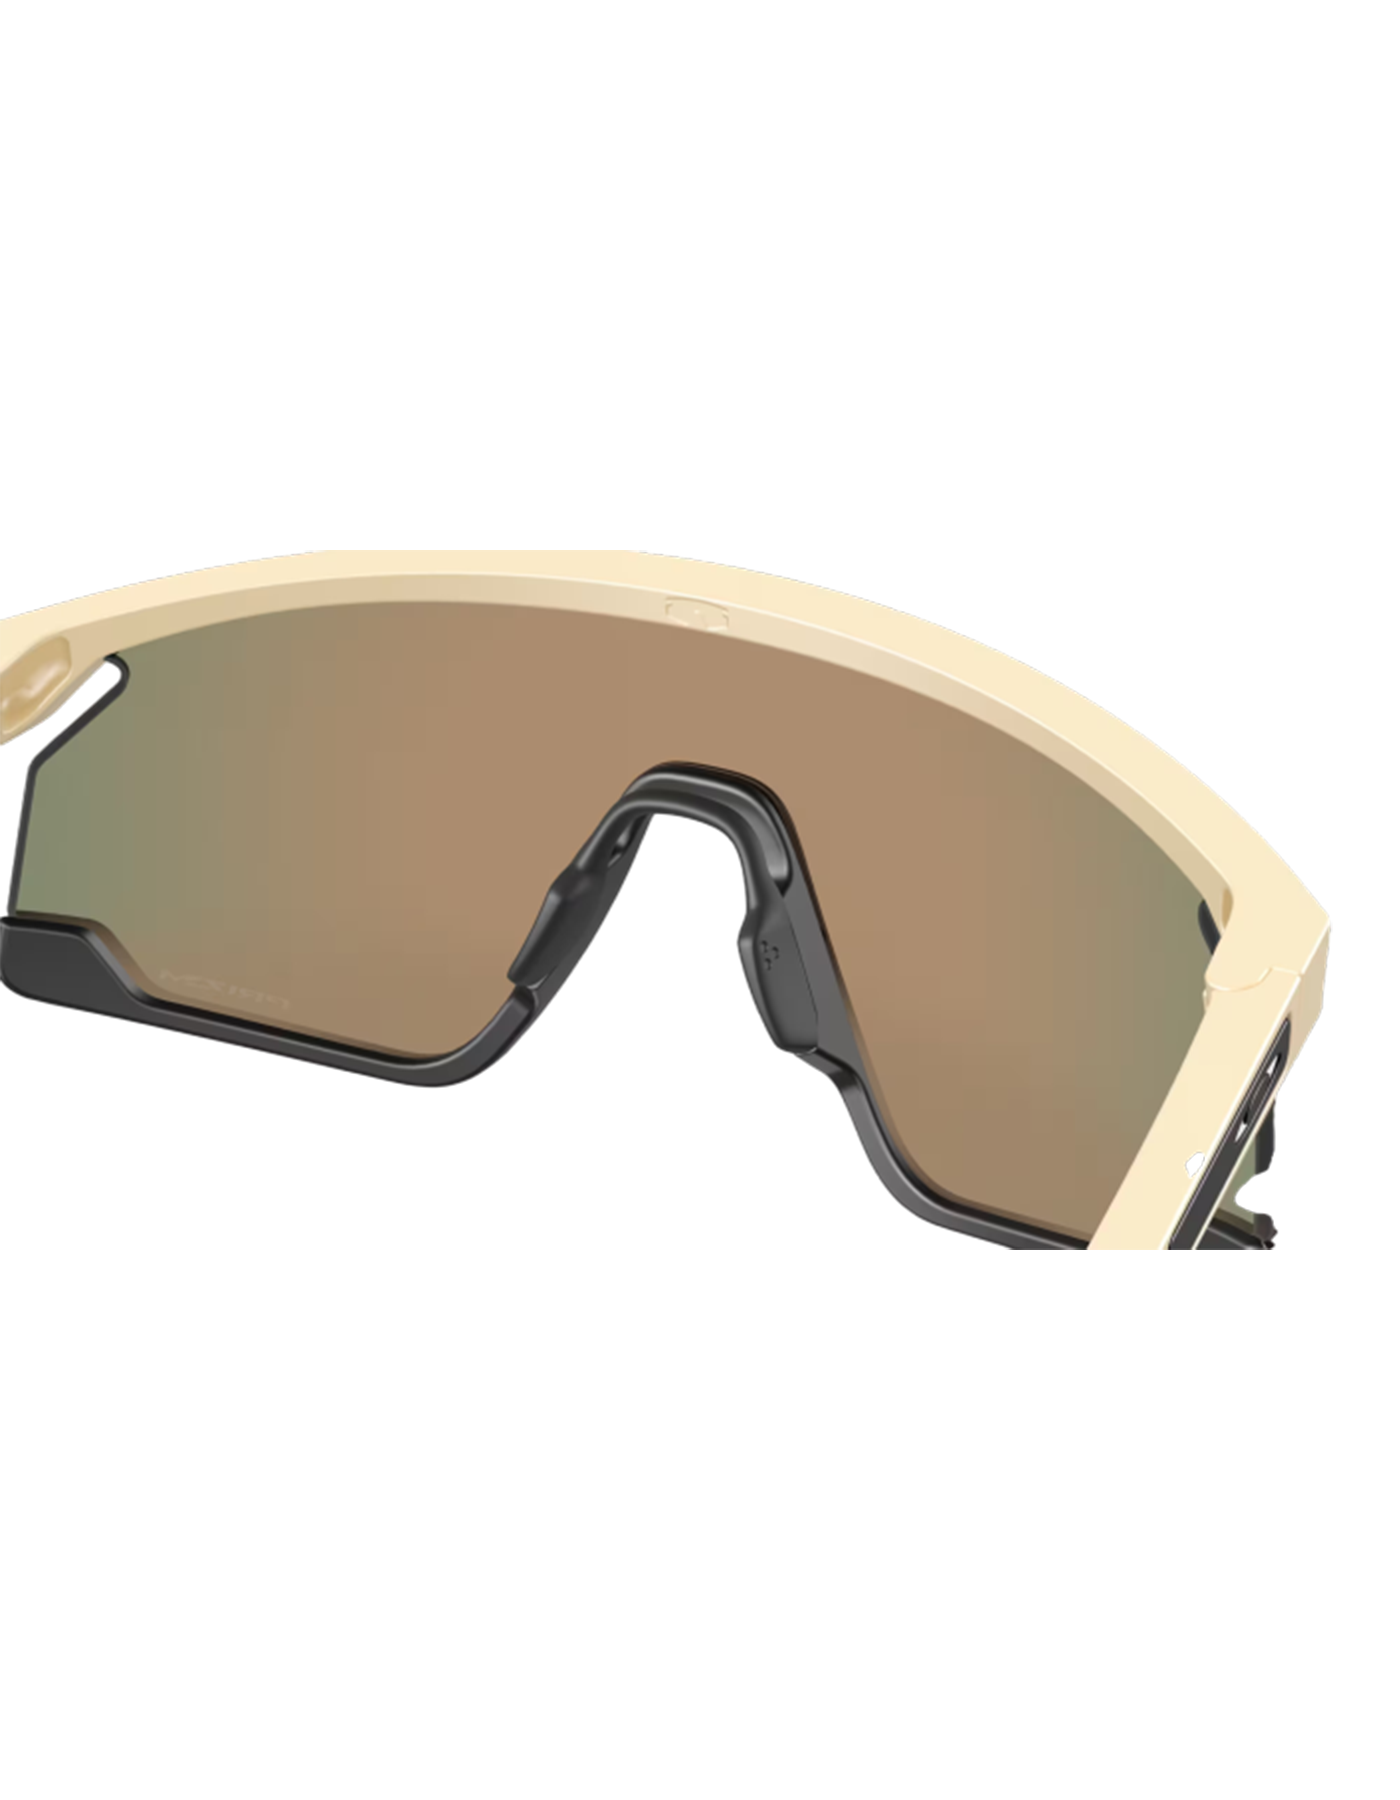 Oakley Bxtr Matte Desert Tan W/ Prizm Ruby Lens Sunglasses - Trojan Wake Ski Snow